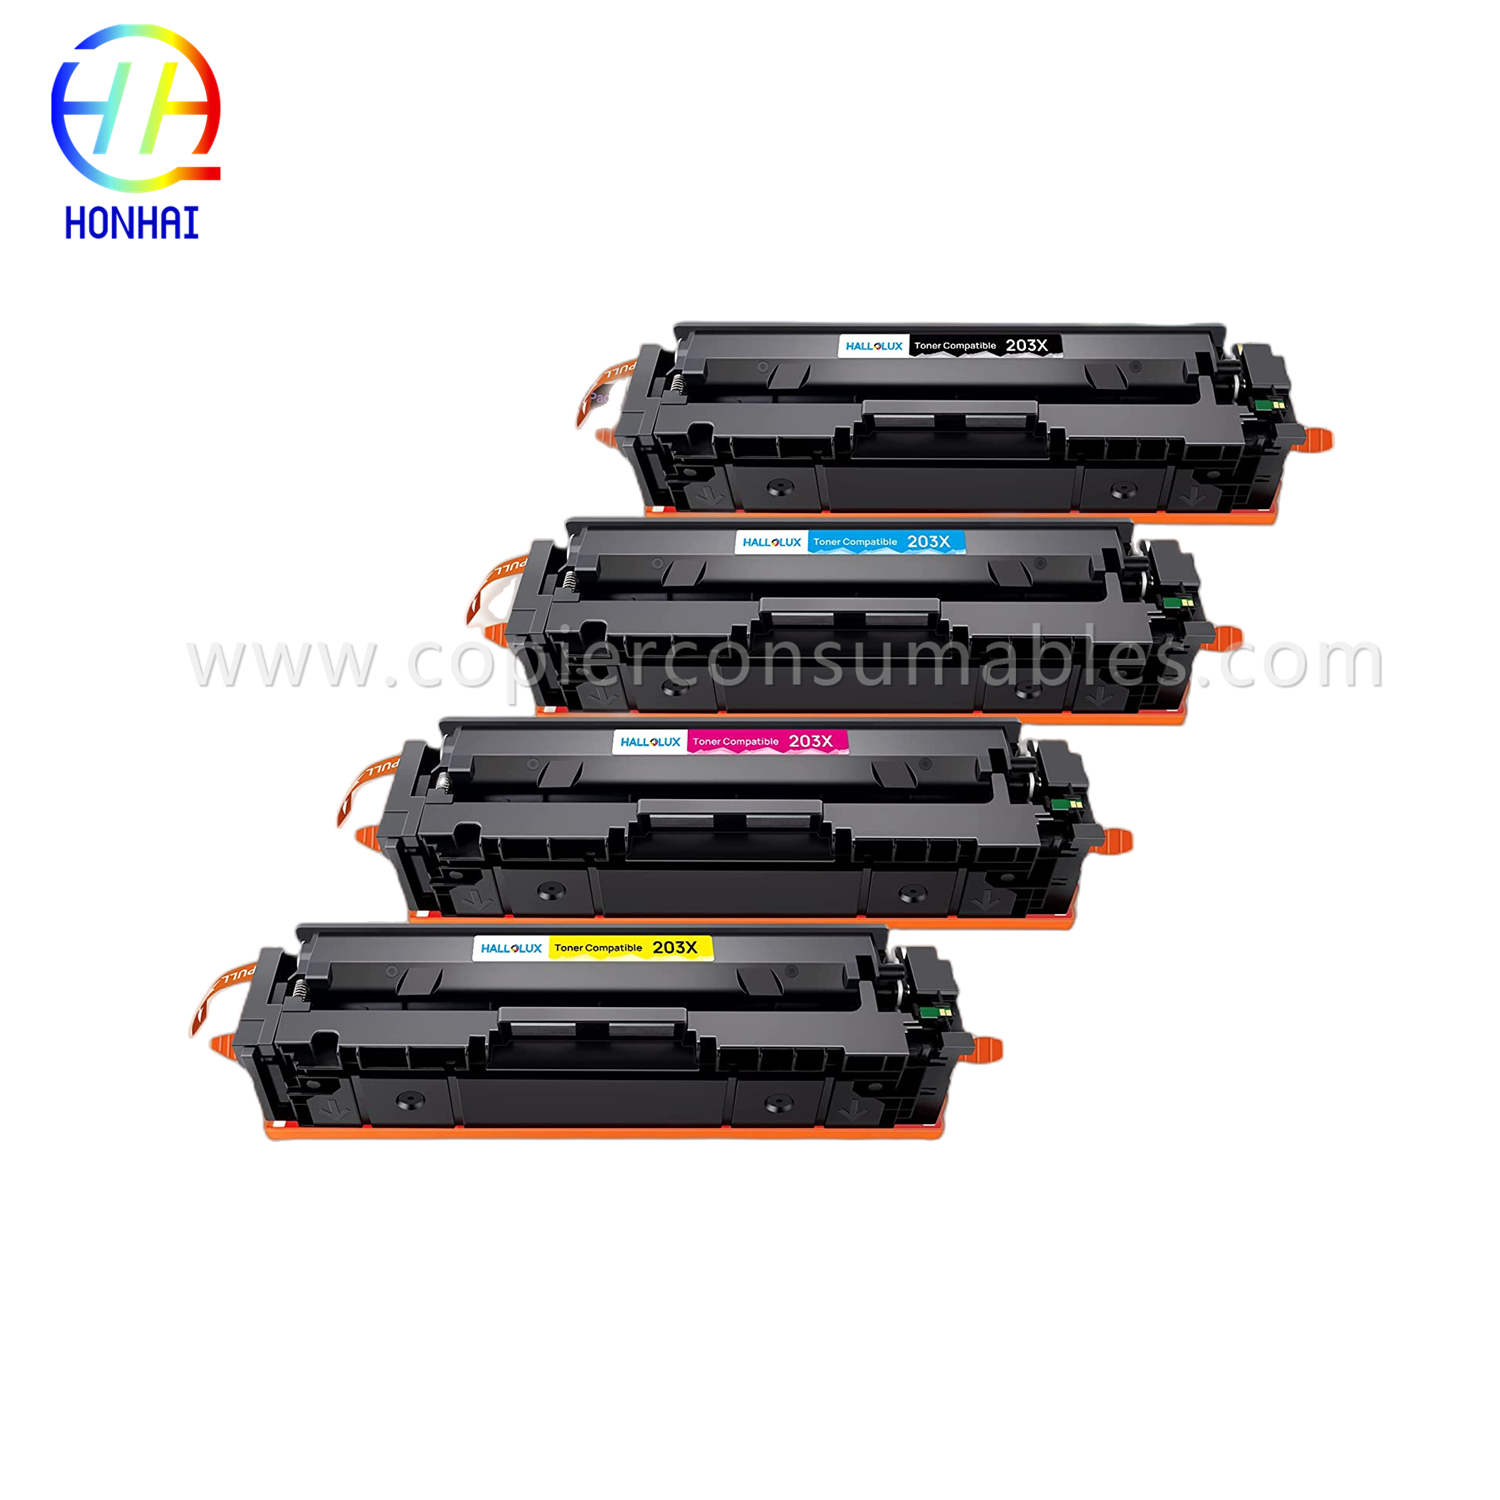 https://www.copierhonhaitech.com/toner-cartridge-for-hp-colour-laserjet-pro-m254dn-m254dw-m254nw-m280nw-m281cdw-m281fdn-m281fdw-203a-ocfem-543a